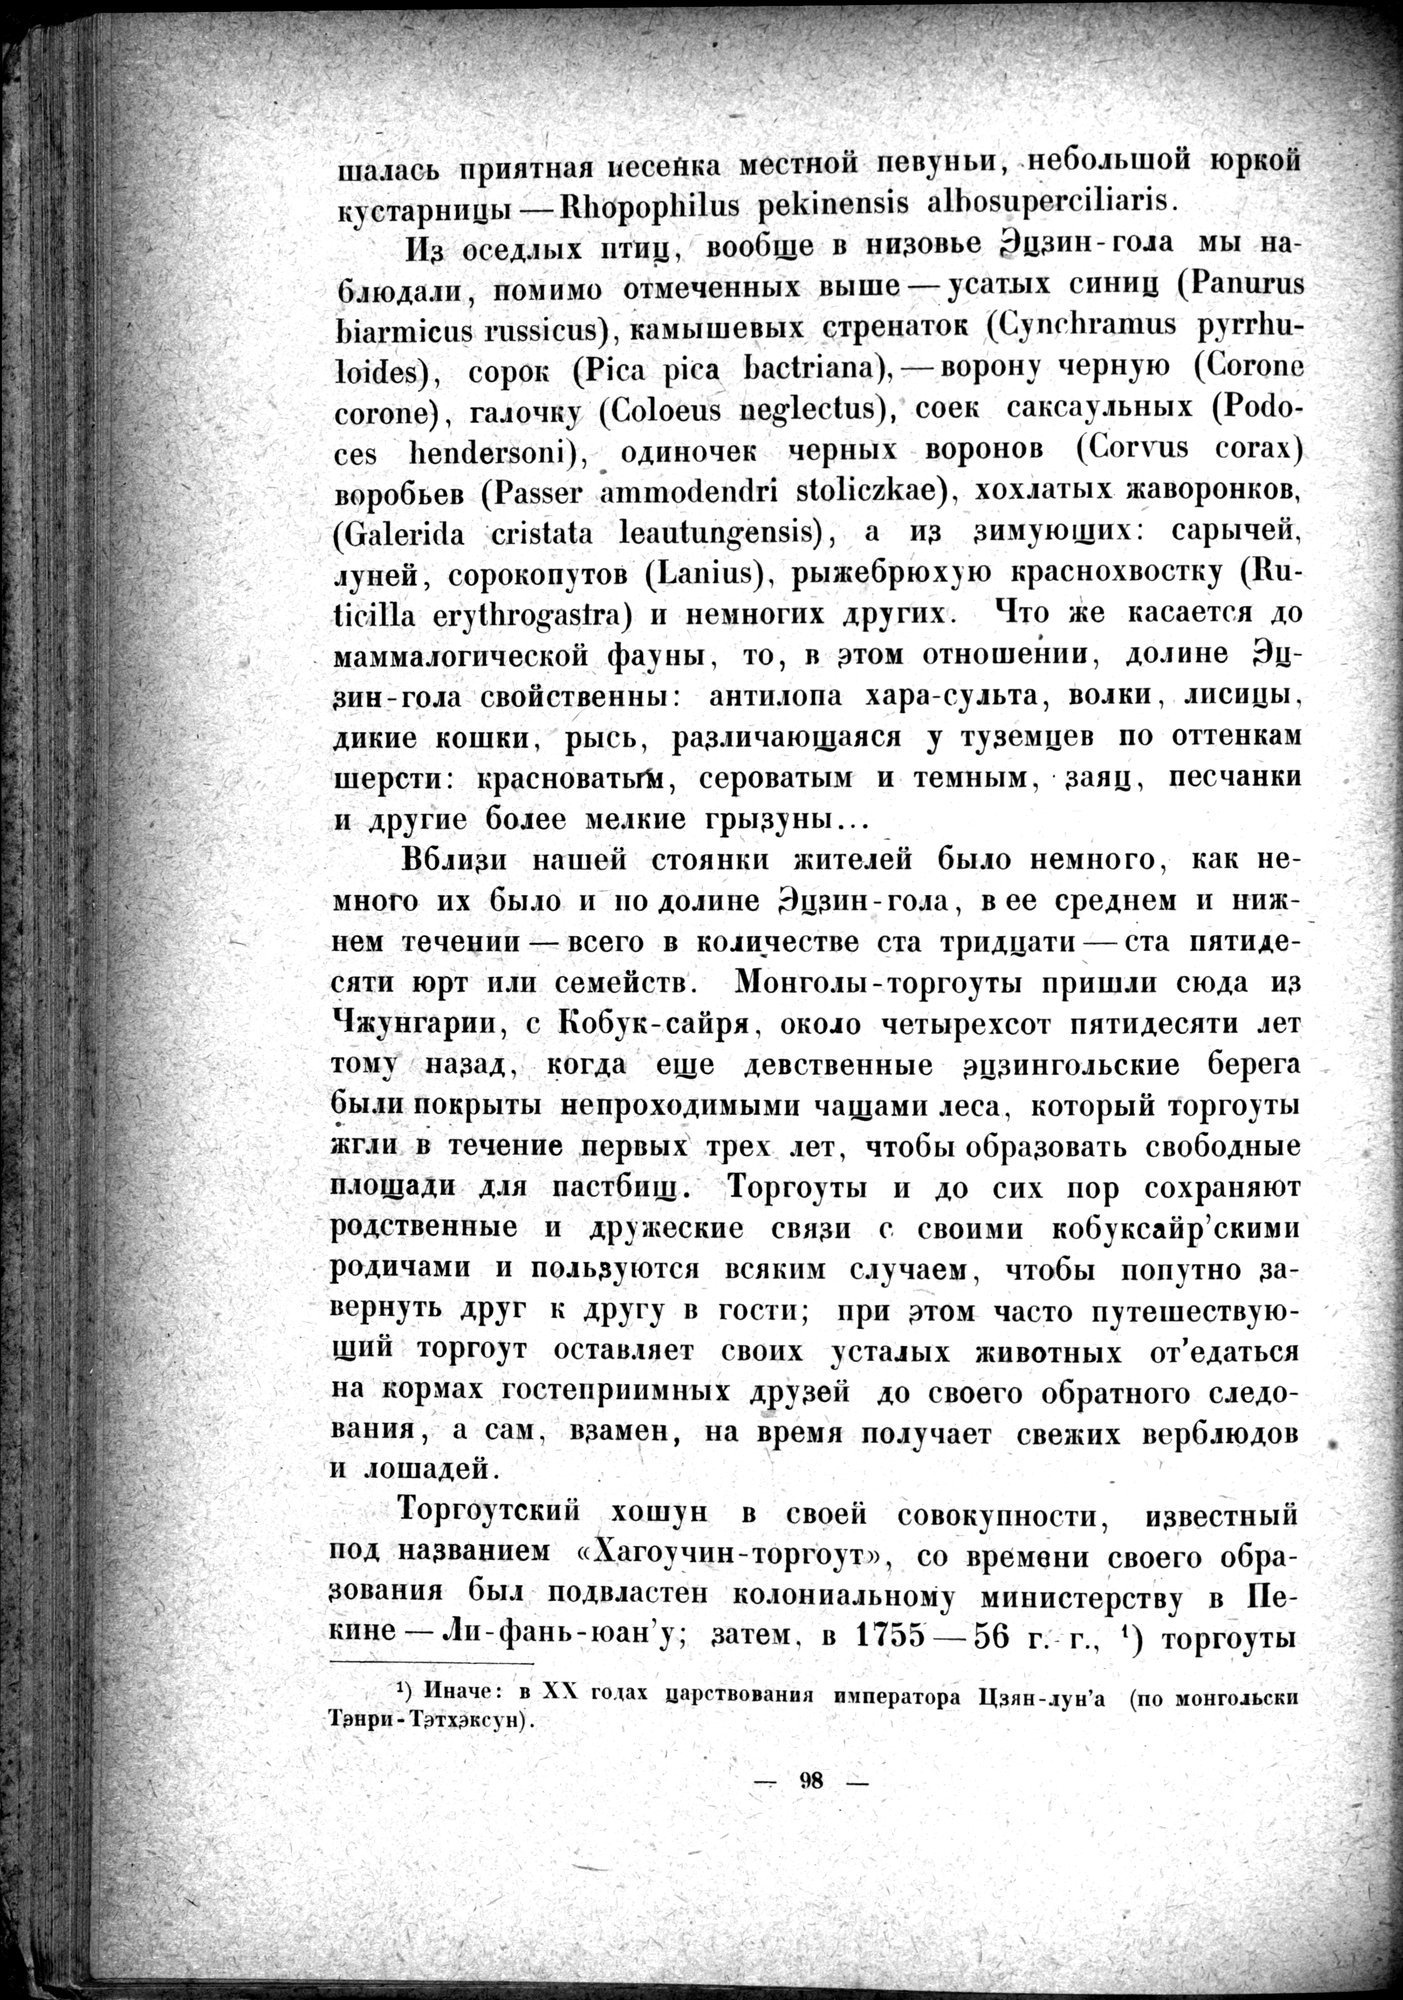 Mongoliya i Amdo i mertby gorod Khara-Khoto : vol.1 / Page 124 (Grayscale High Resolution Image)